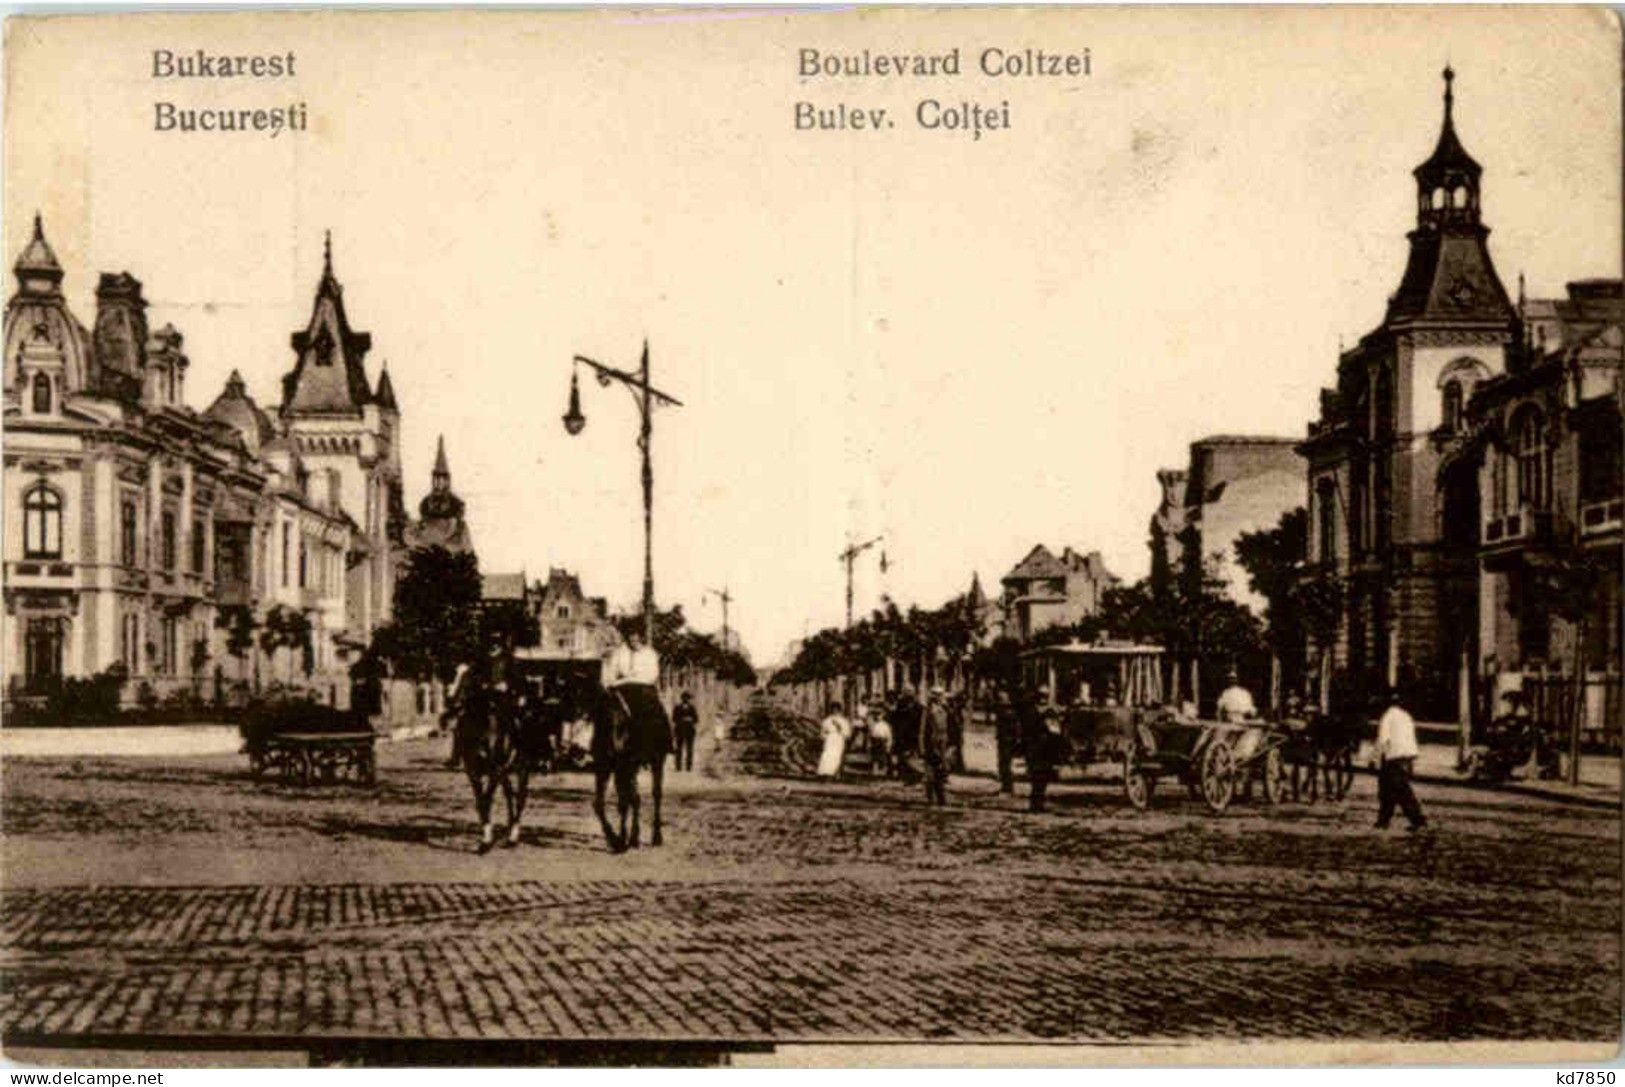 Bukarest - Boulevard Coltzei - Romania